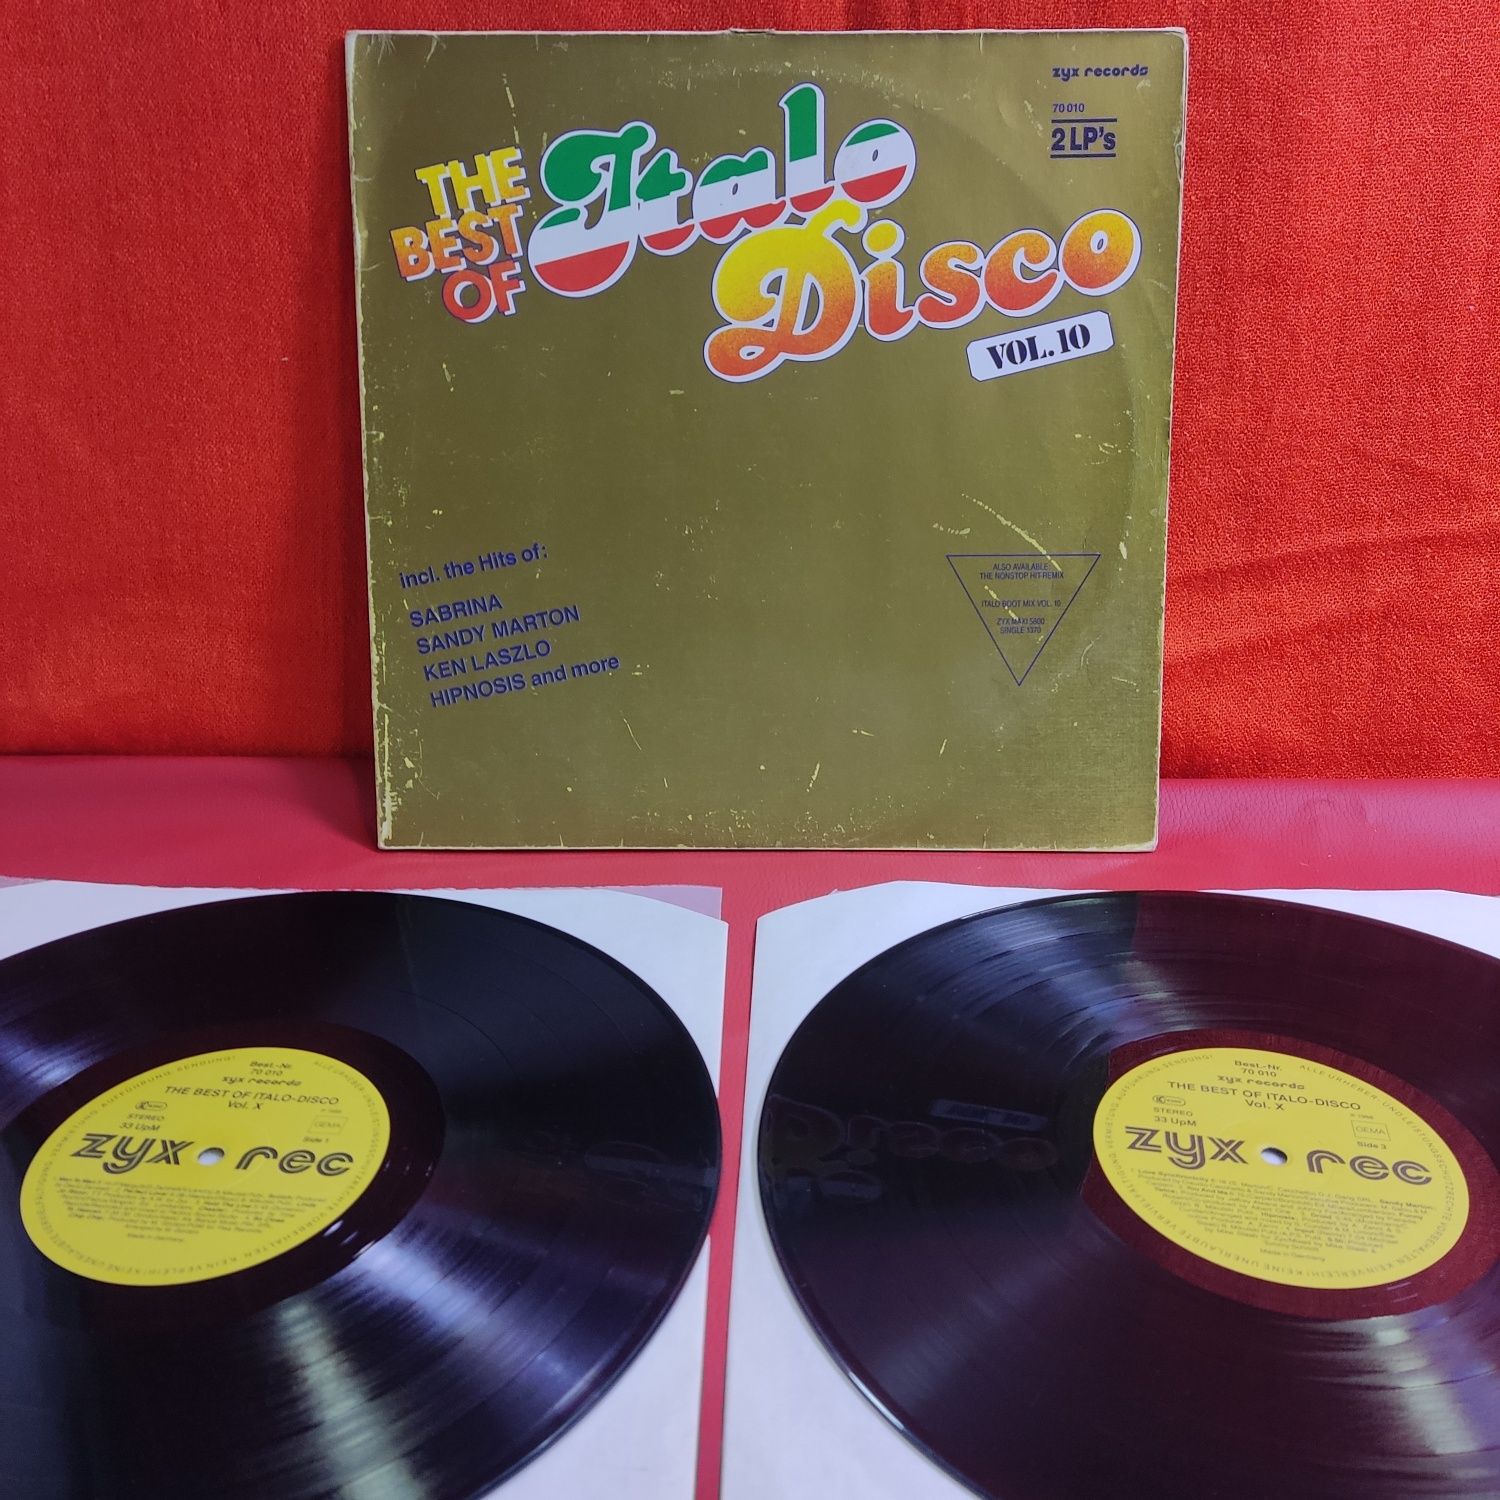 The Best Of Italo-Disco Vol.10 2LP.1988.Germany.